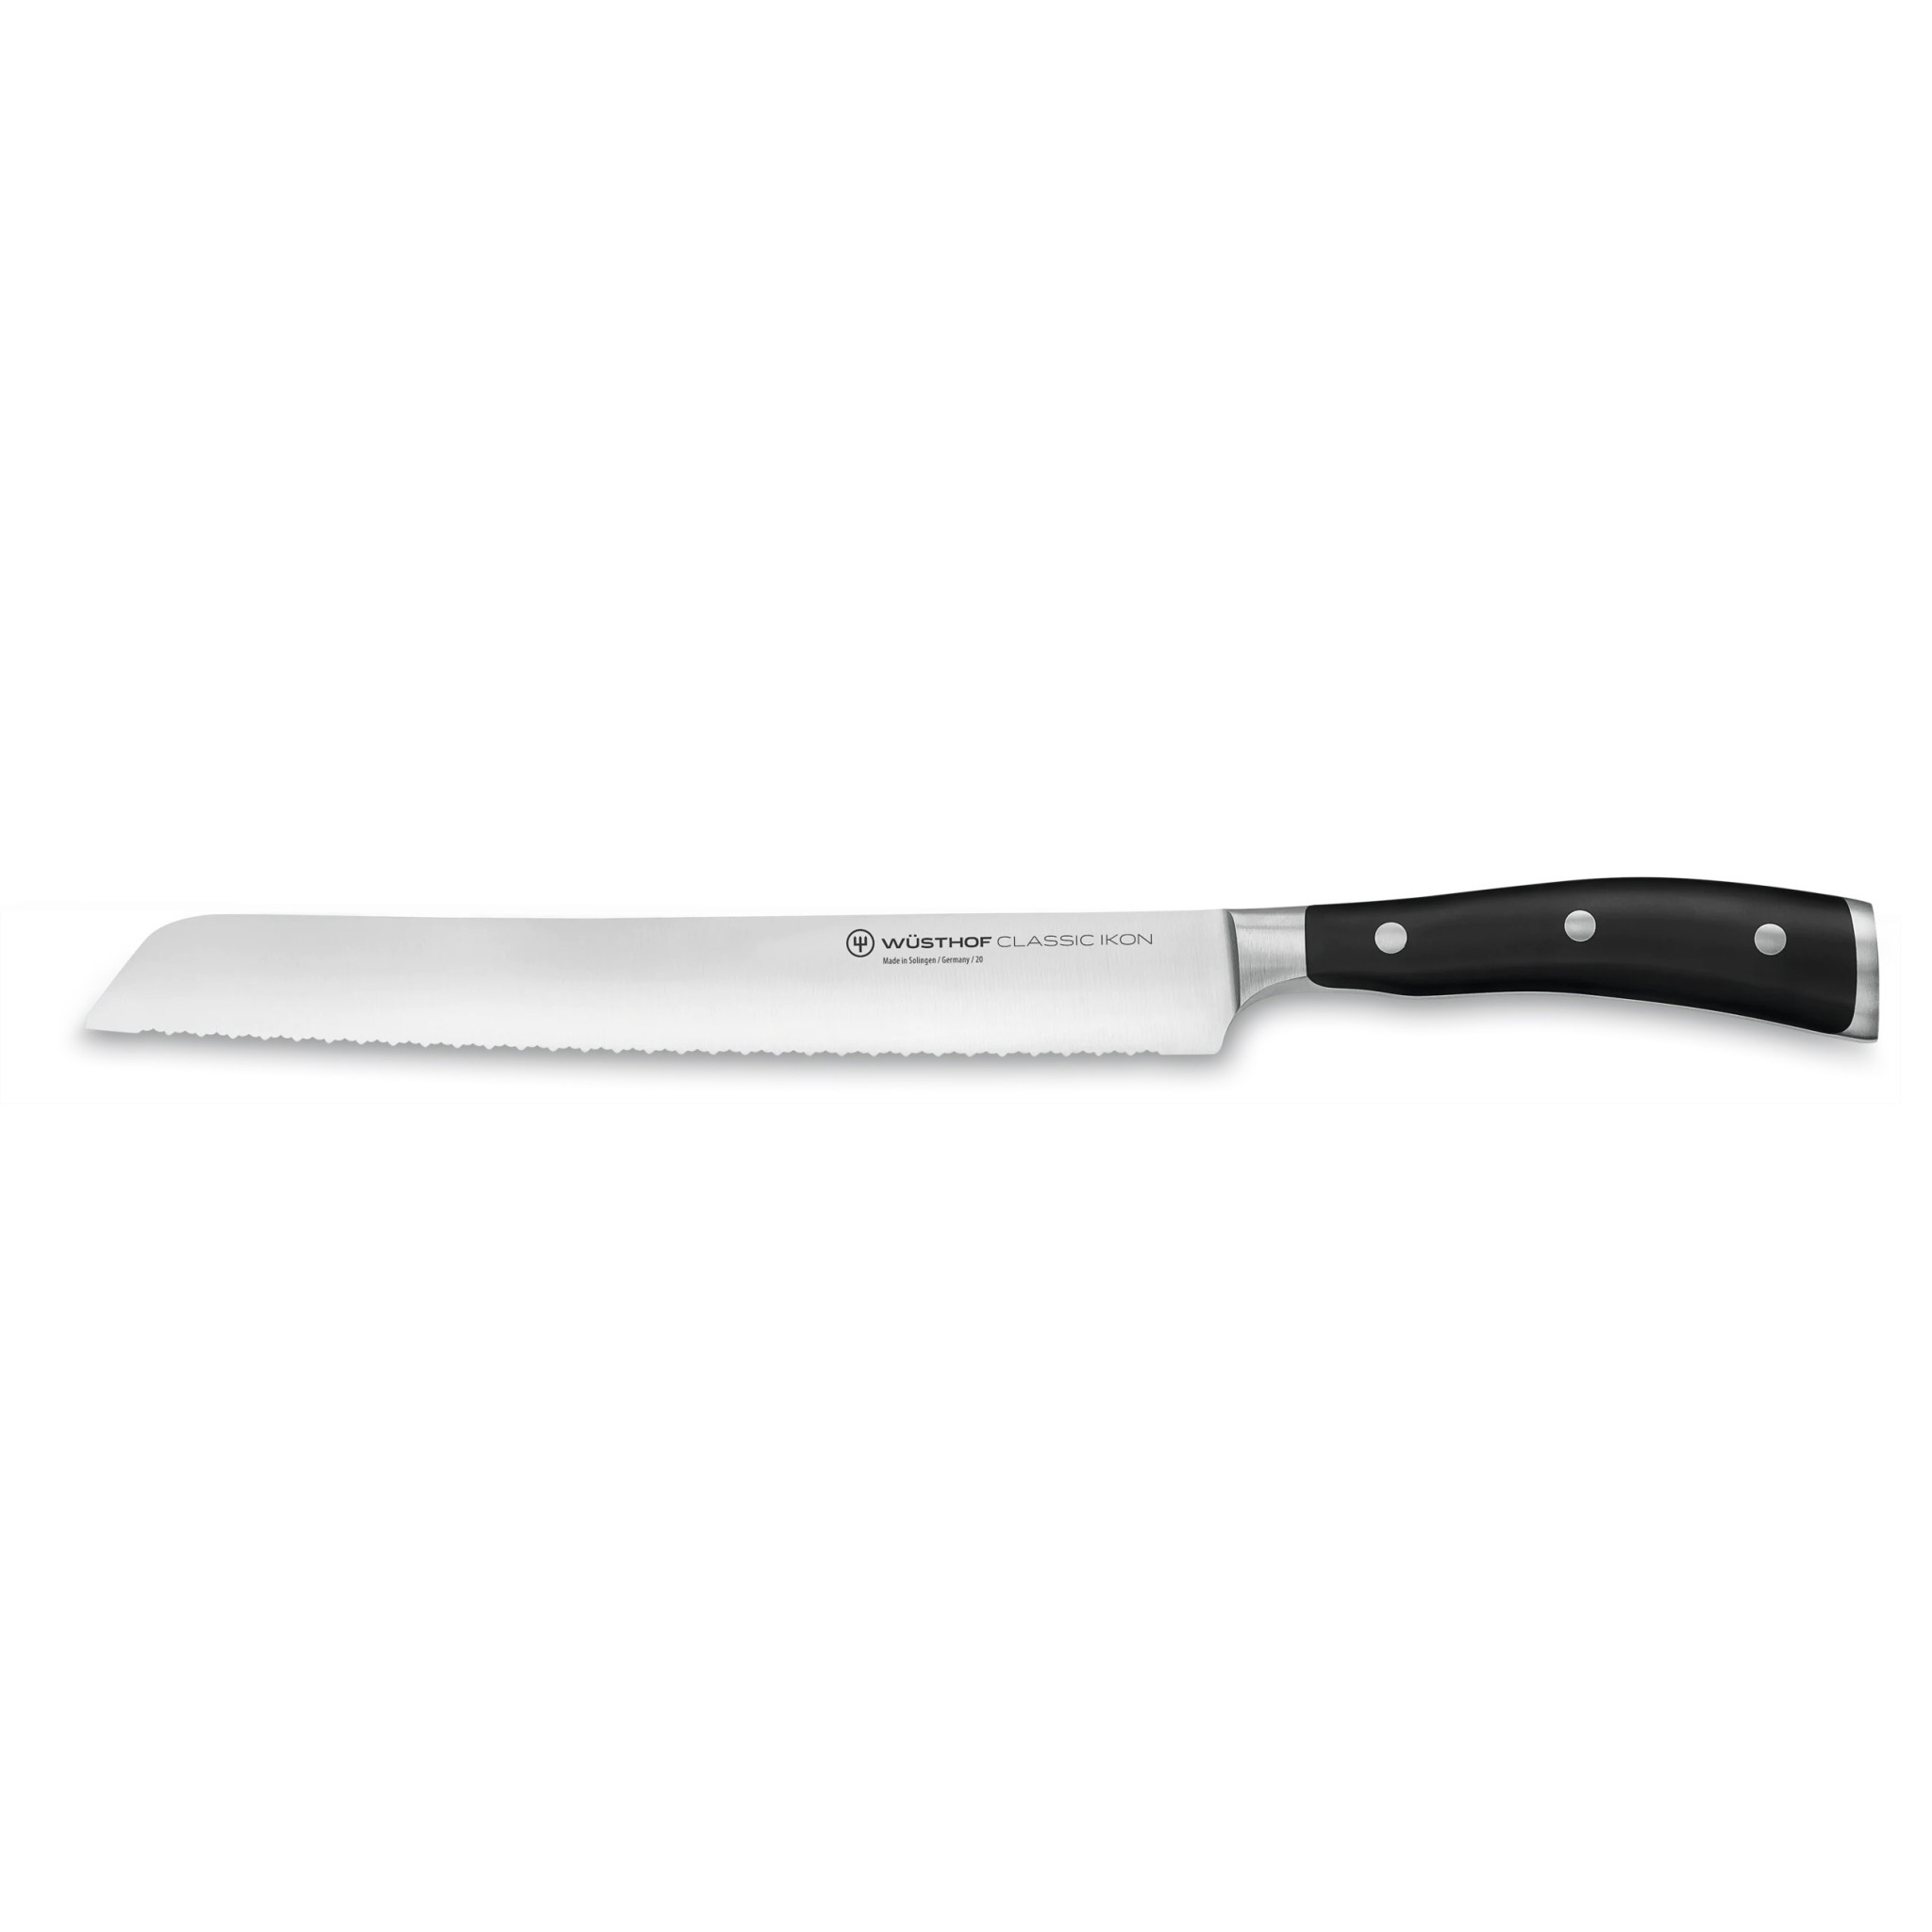 Wusthof Germany - Classic - Fish fillet knife 18cm - 1040103818